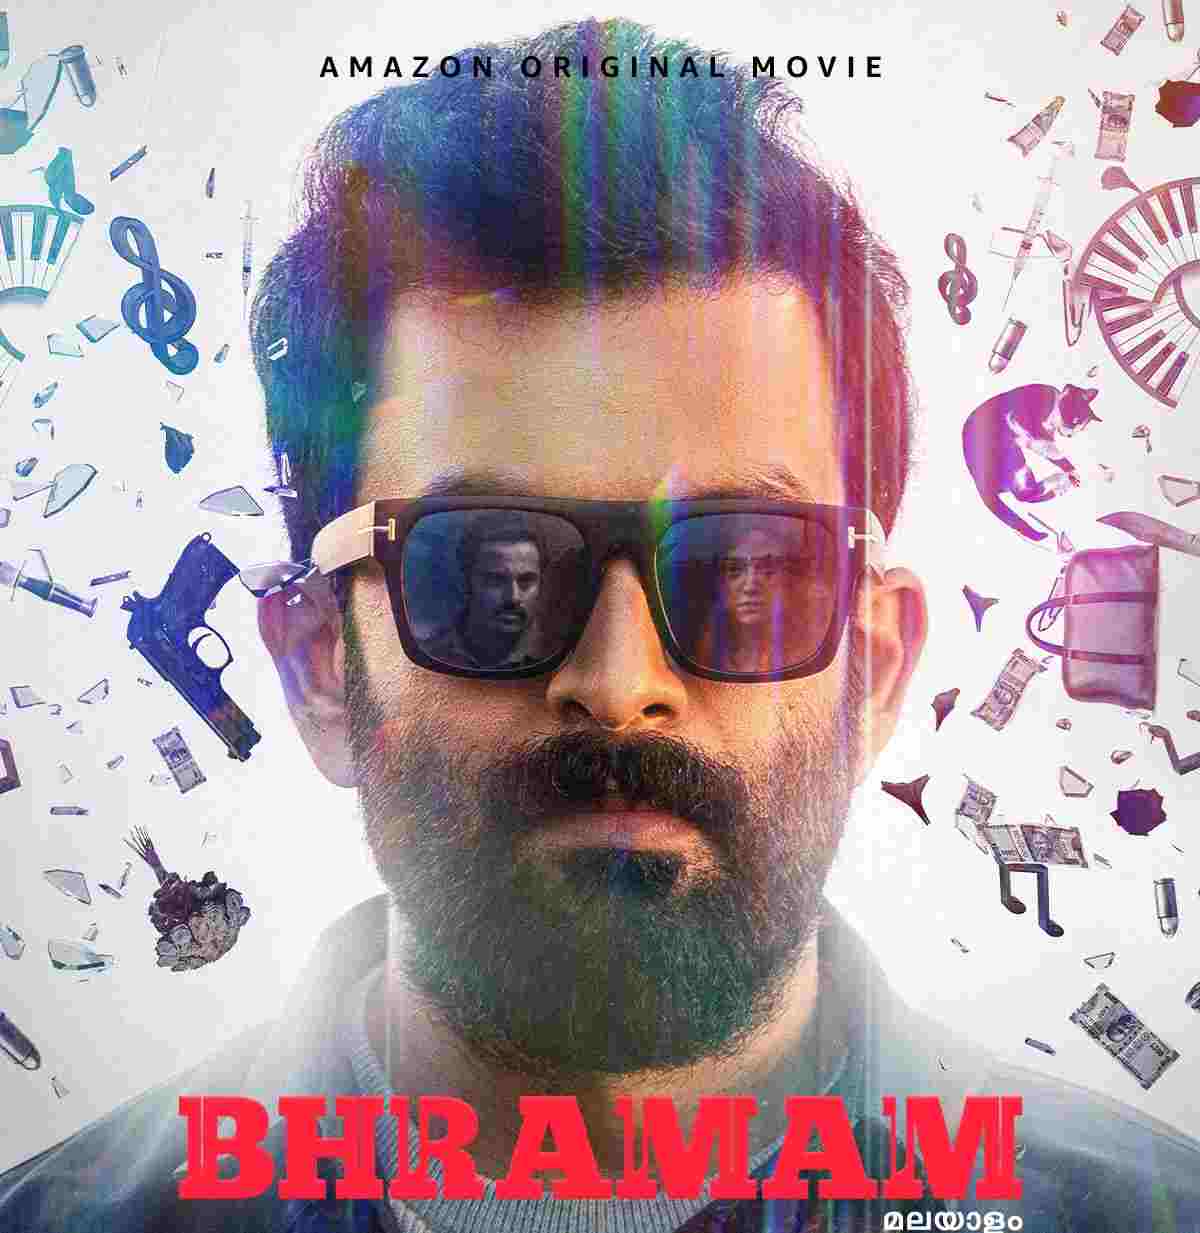 Amazon Prime Video has announced the premiere of 'Bhramam' starring Prithviraj on October 7